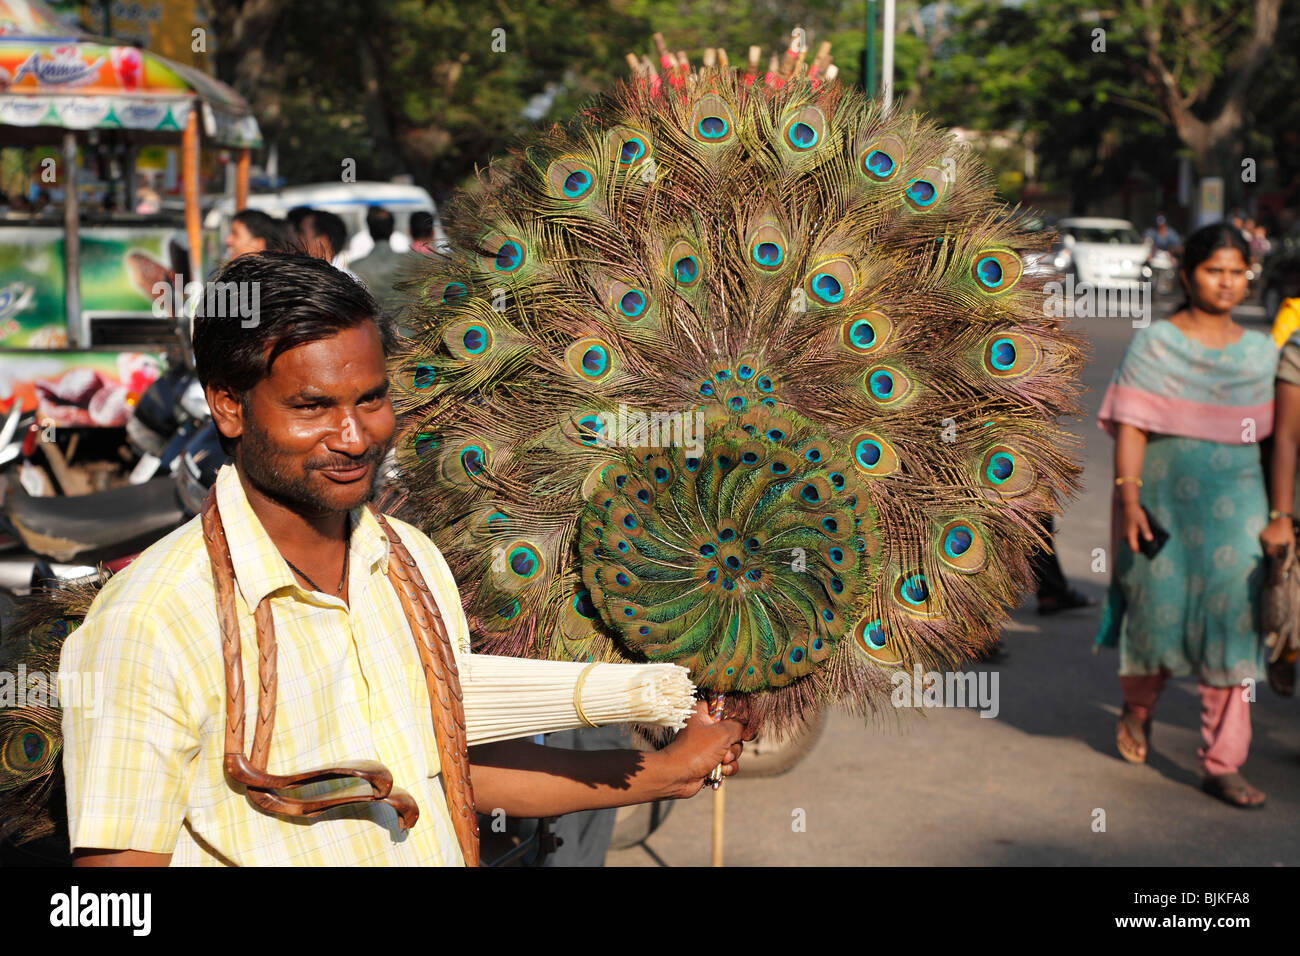 Vendedor de plumas de pavo real, Trivandrum, Thiruvananthapuram, el estado de Kerala, India, Asia Foto de stock